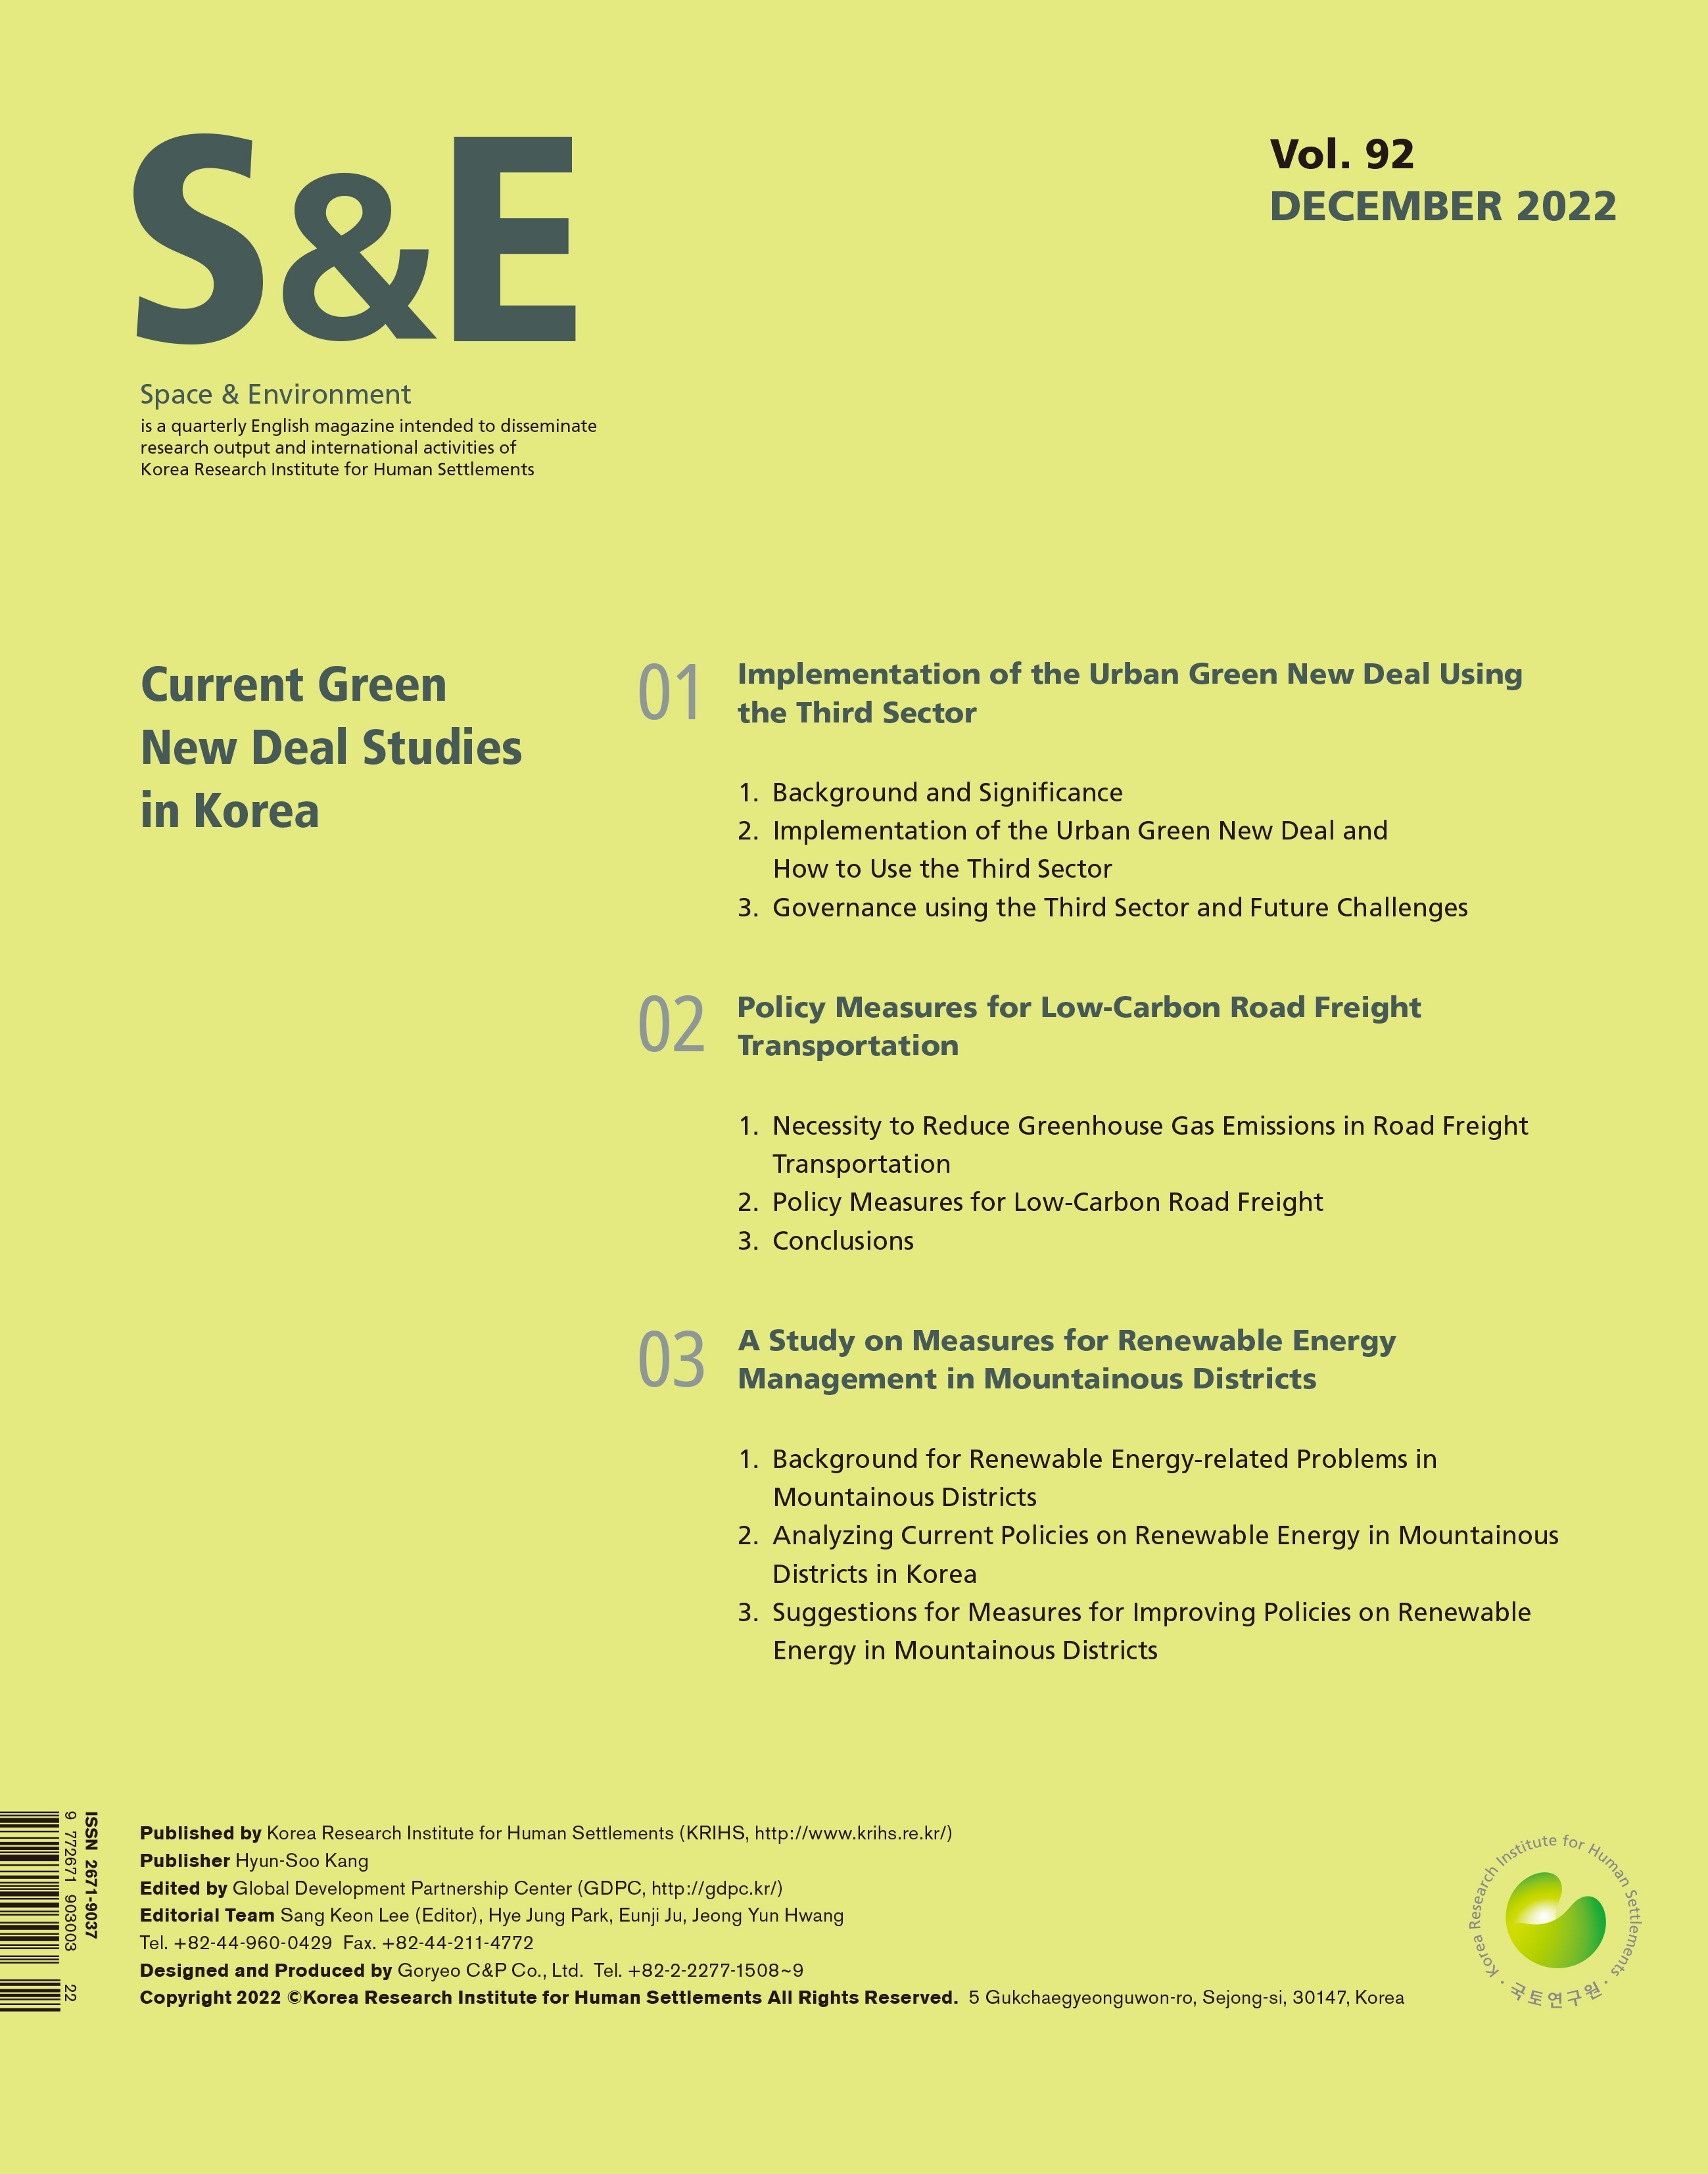 Space & Environment Vol. 92 (December 2022)
Current Green New Deal Studies in Korea